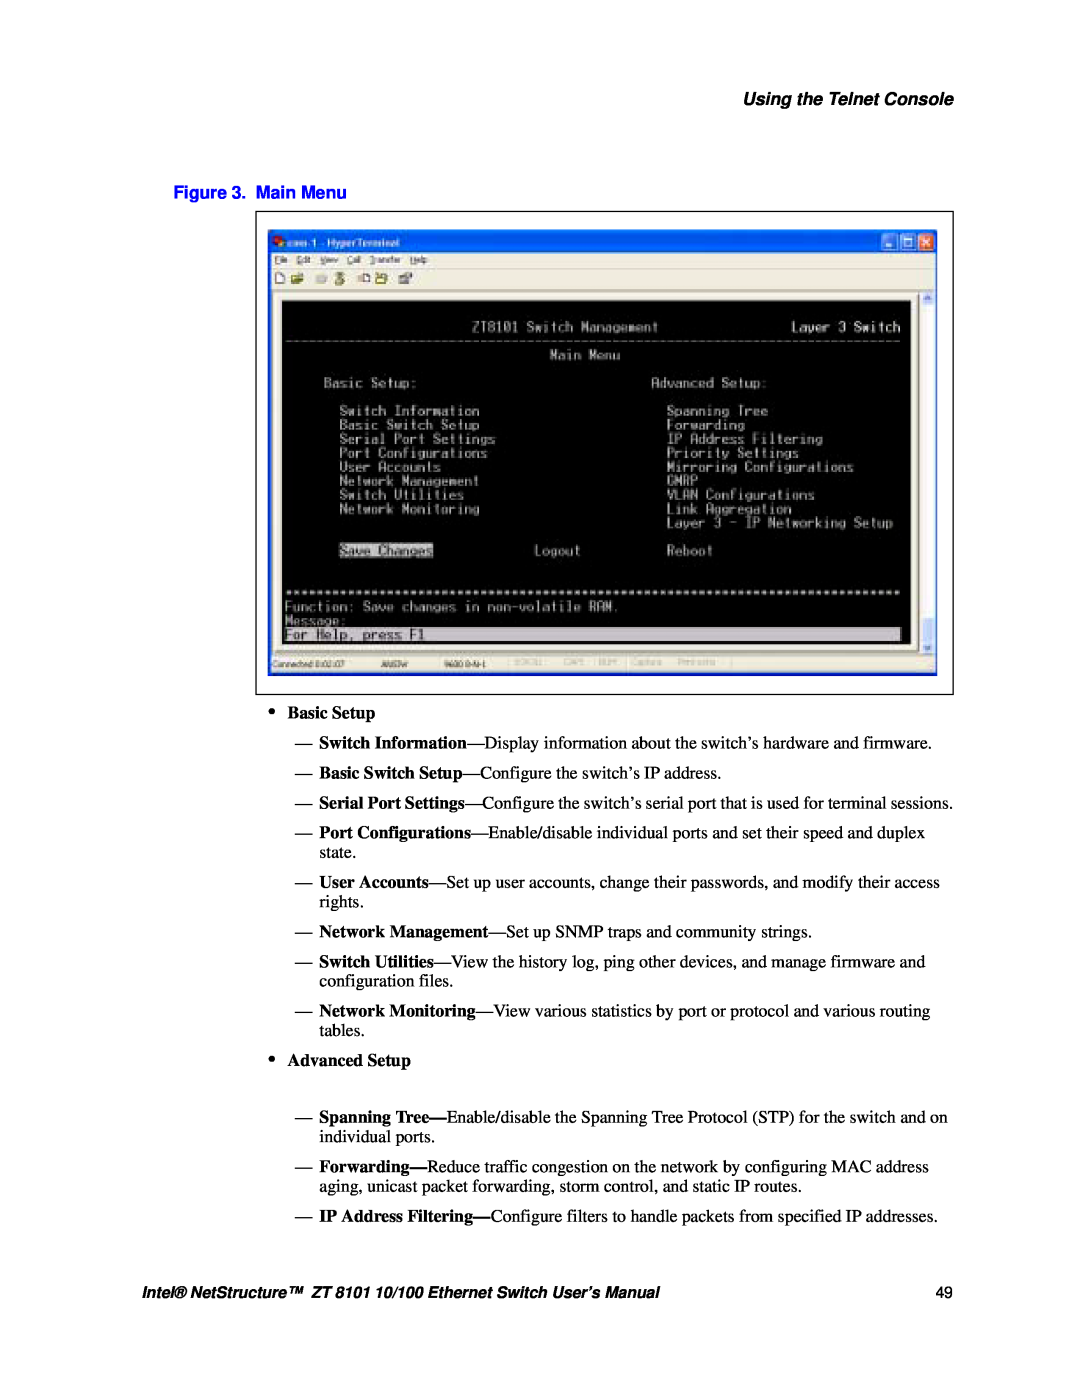 Intel ZT 8101 10/100 user manual Main Menu, Using the Telnet Console, •Basic Setup, •Advanced Setup 